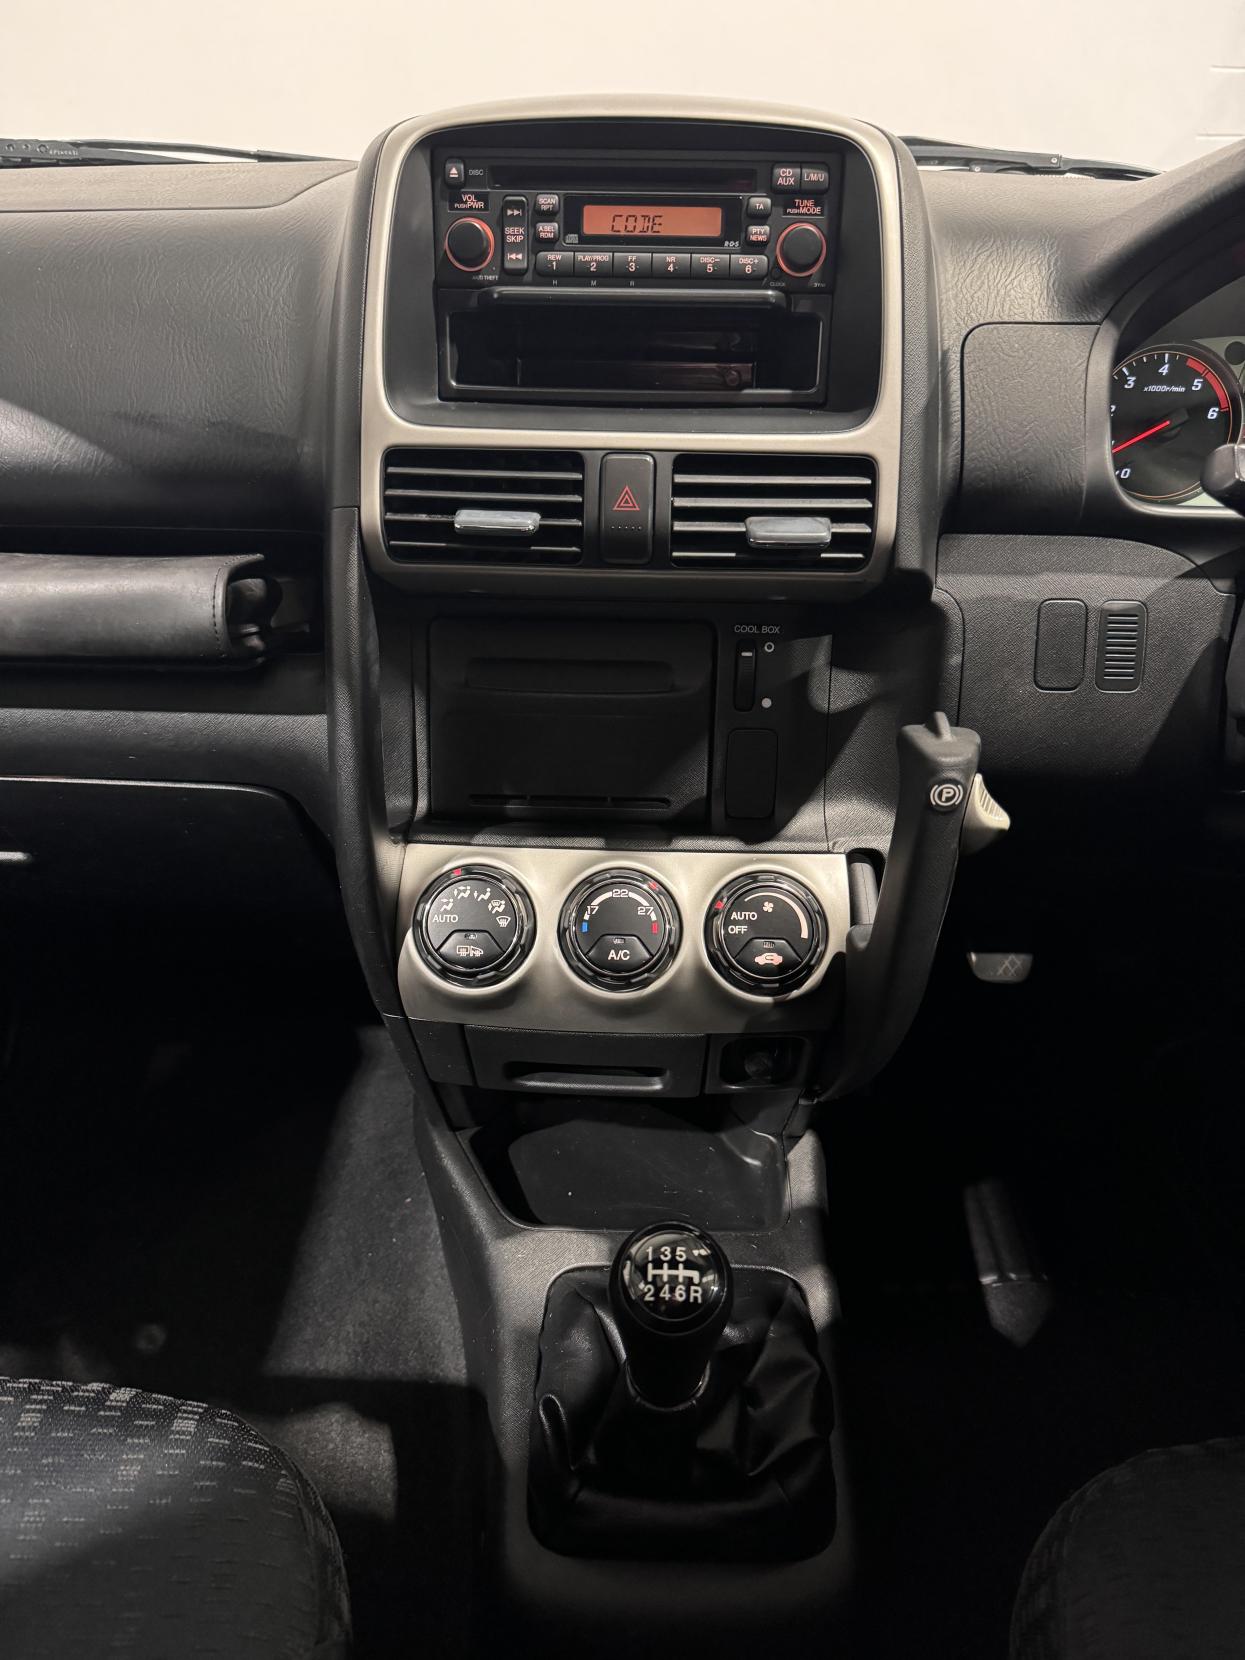 Honda CR-V 2.2 i-CDTi Sport SUV 5dr Diesel Manual (177 g/km, 138 bhp)